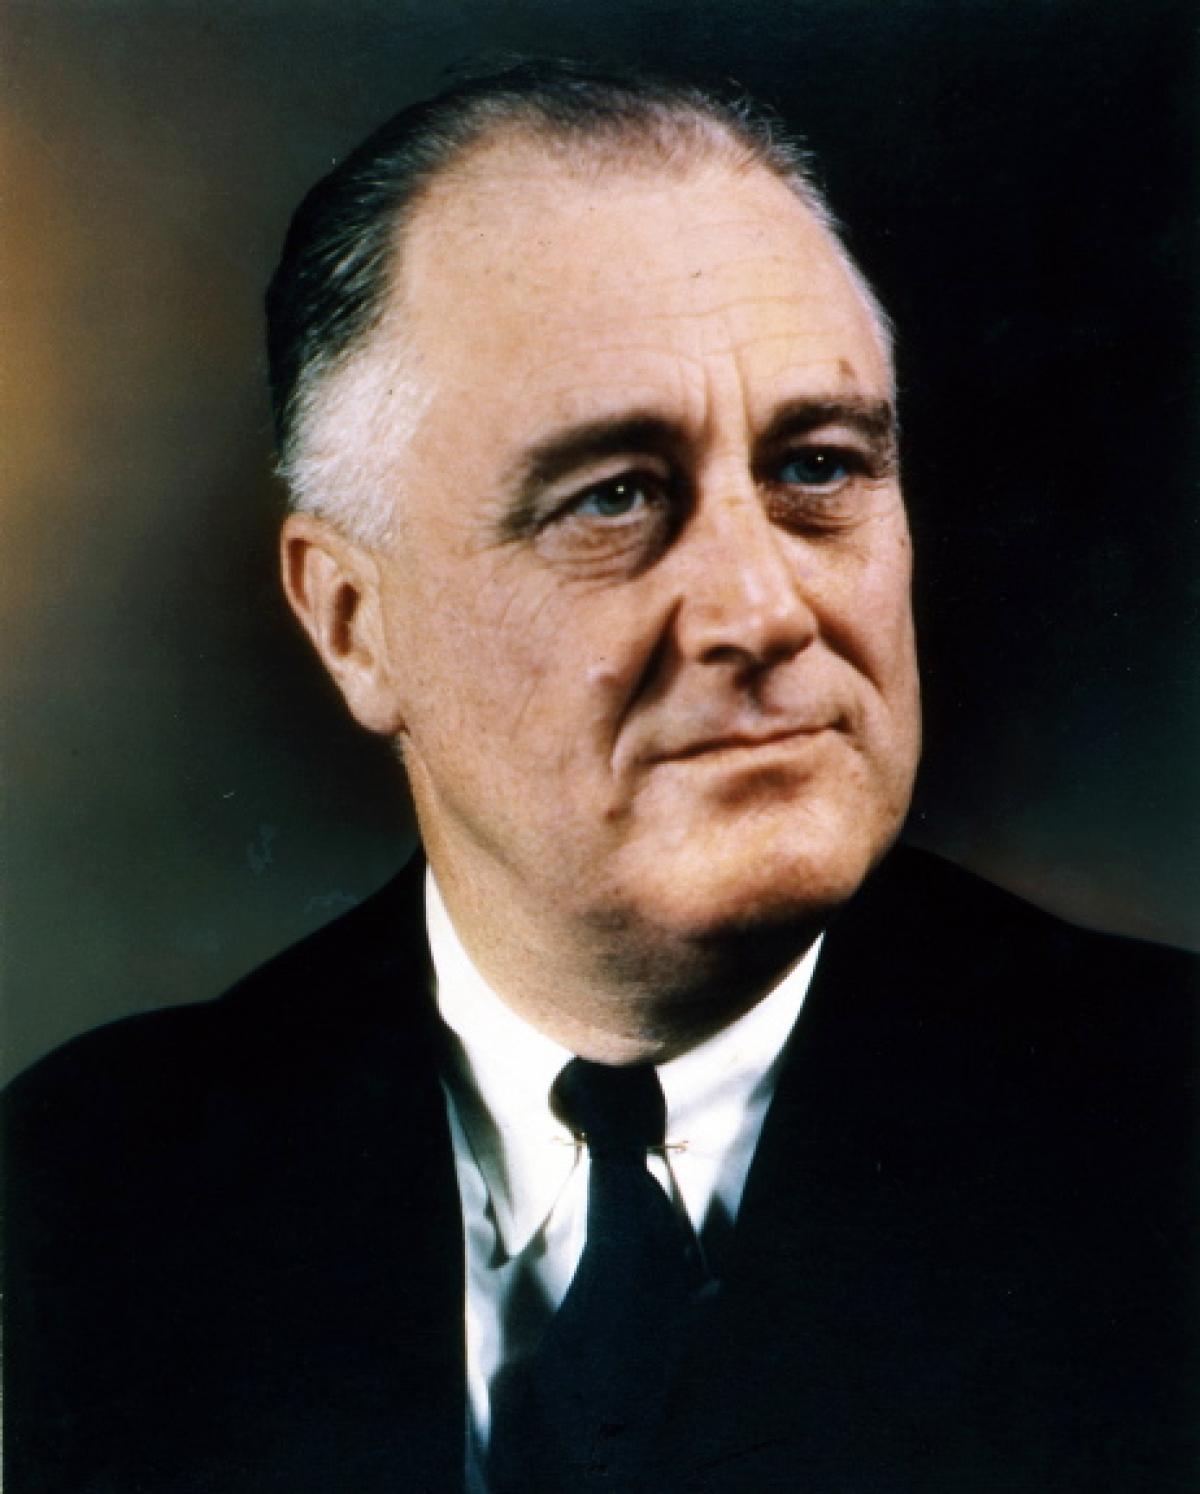 Picture of Franklin Roosevelt